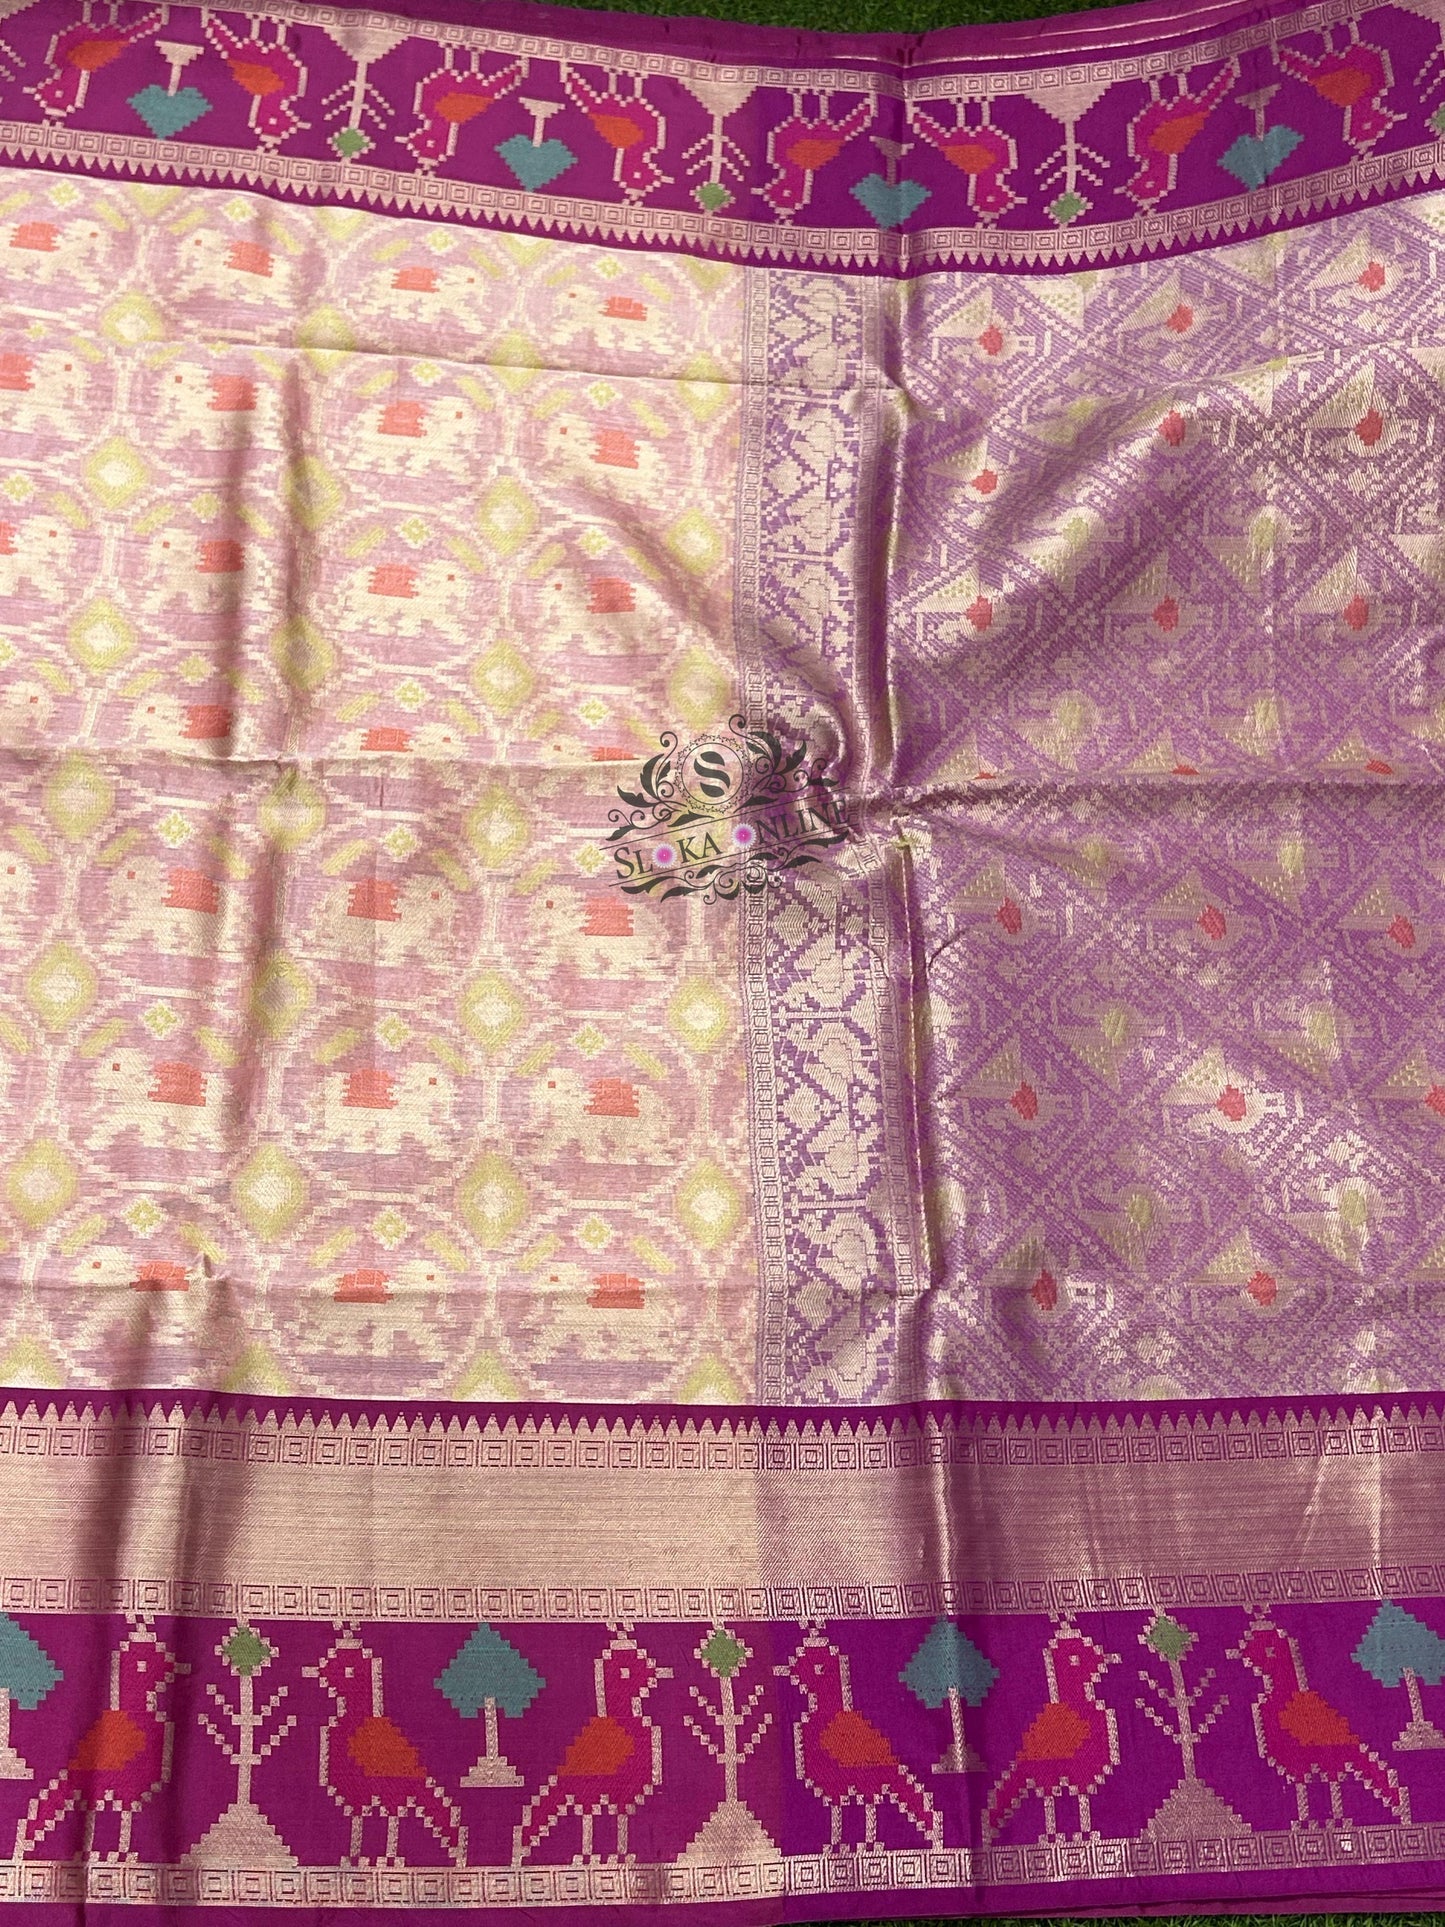 Beautiful Shades Of Handloom Tissue Kota Sarees